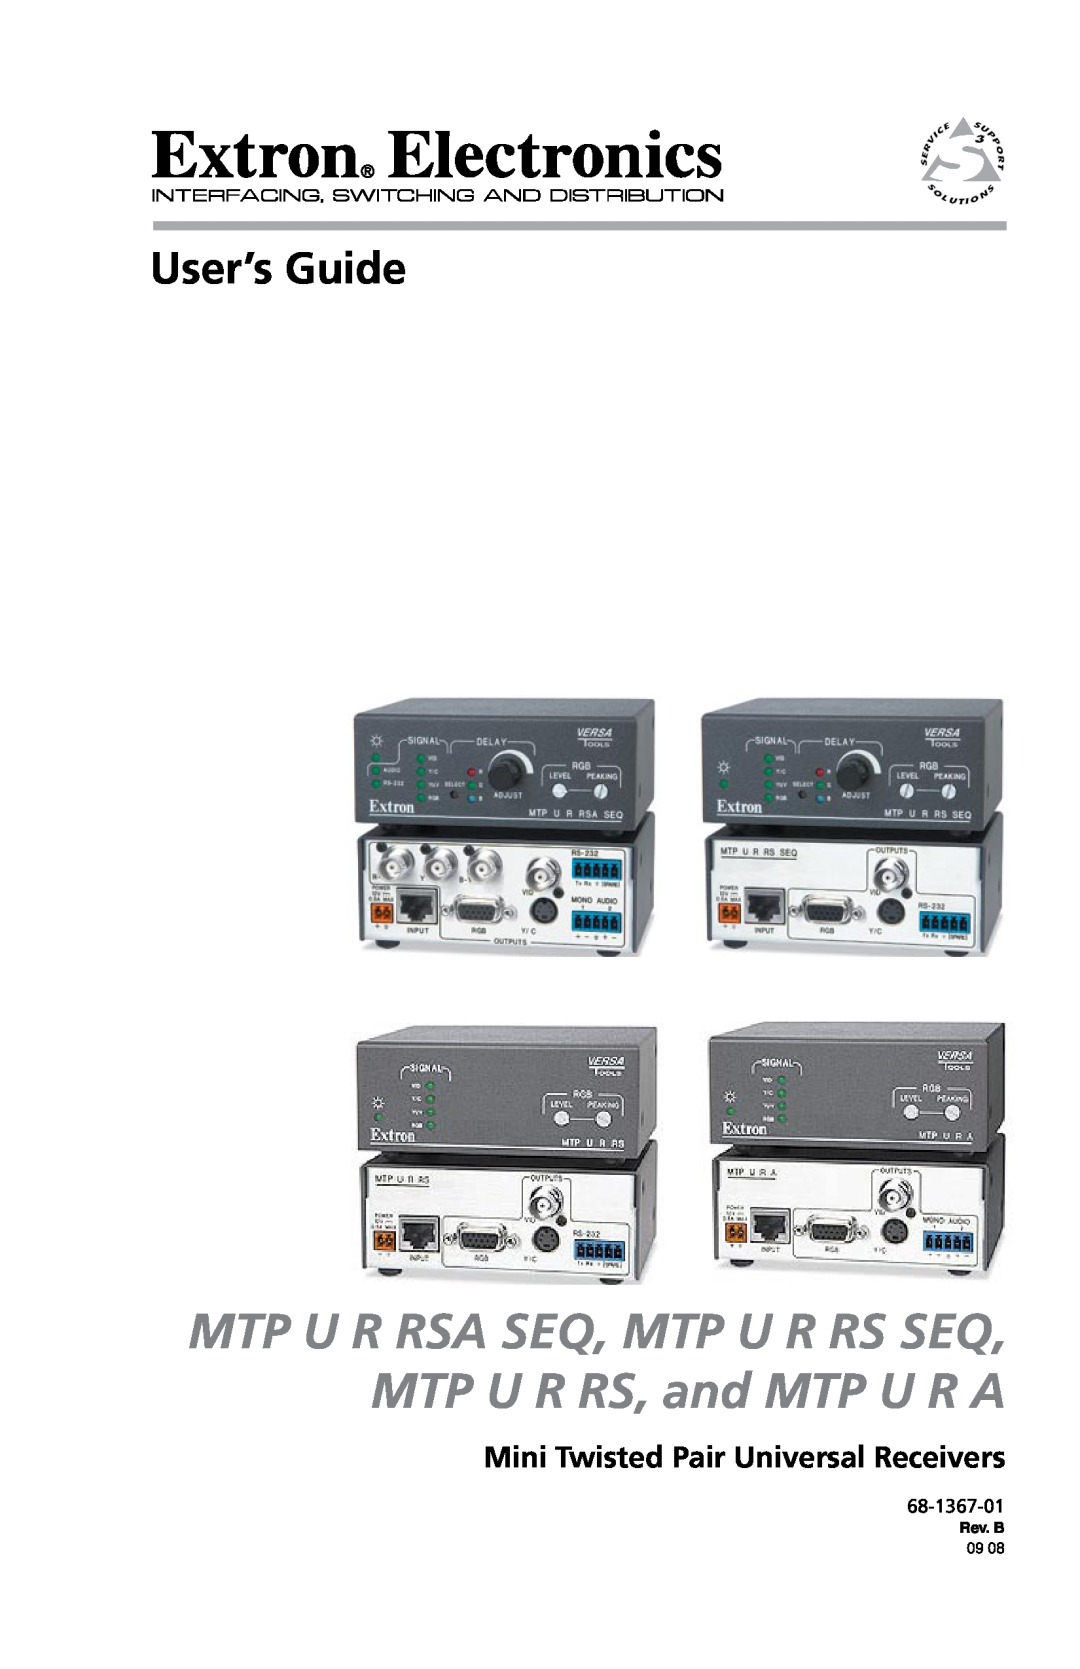 Extron electronic manual User’s Guide, MTP U R RSA SEQ, MTP U R RS SEQ, MTP U R RS, and MTP U R A, Rev. B 